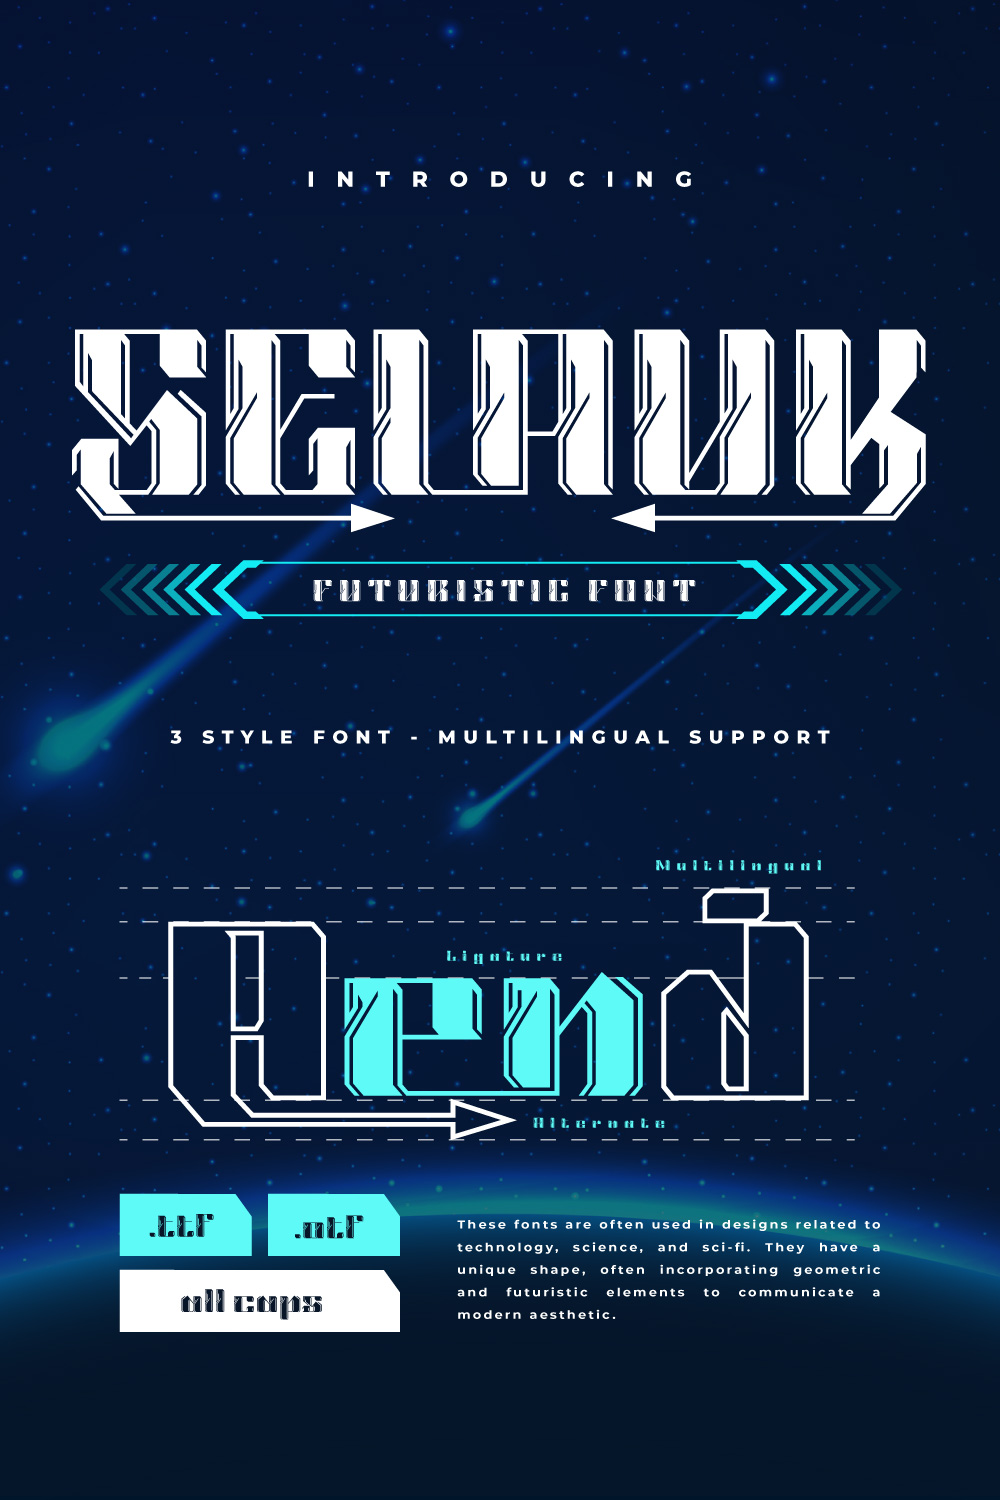 Selauk | Futuristic Font pinterest preview image.